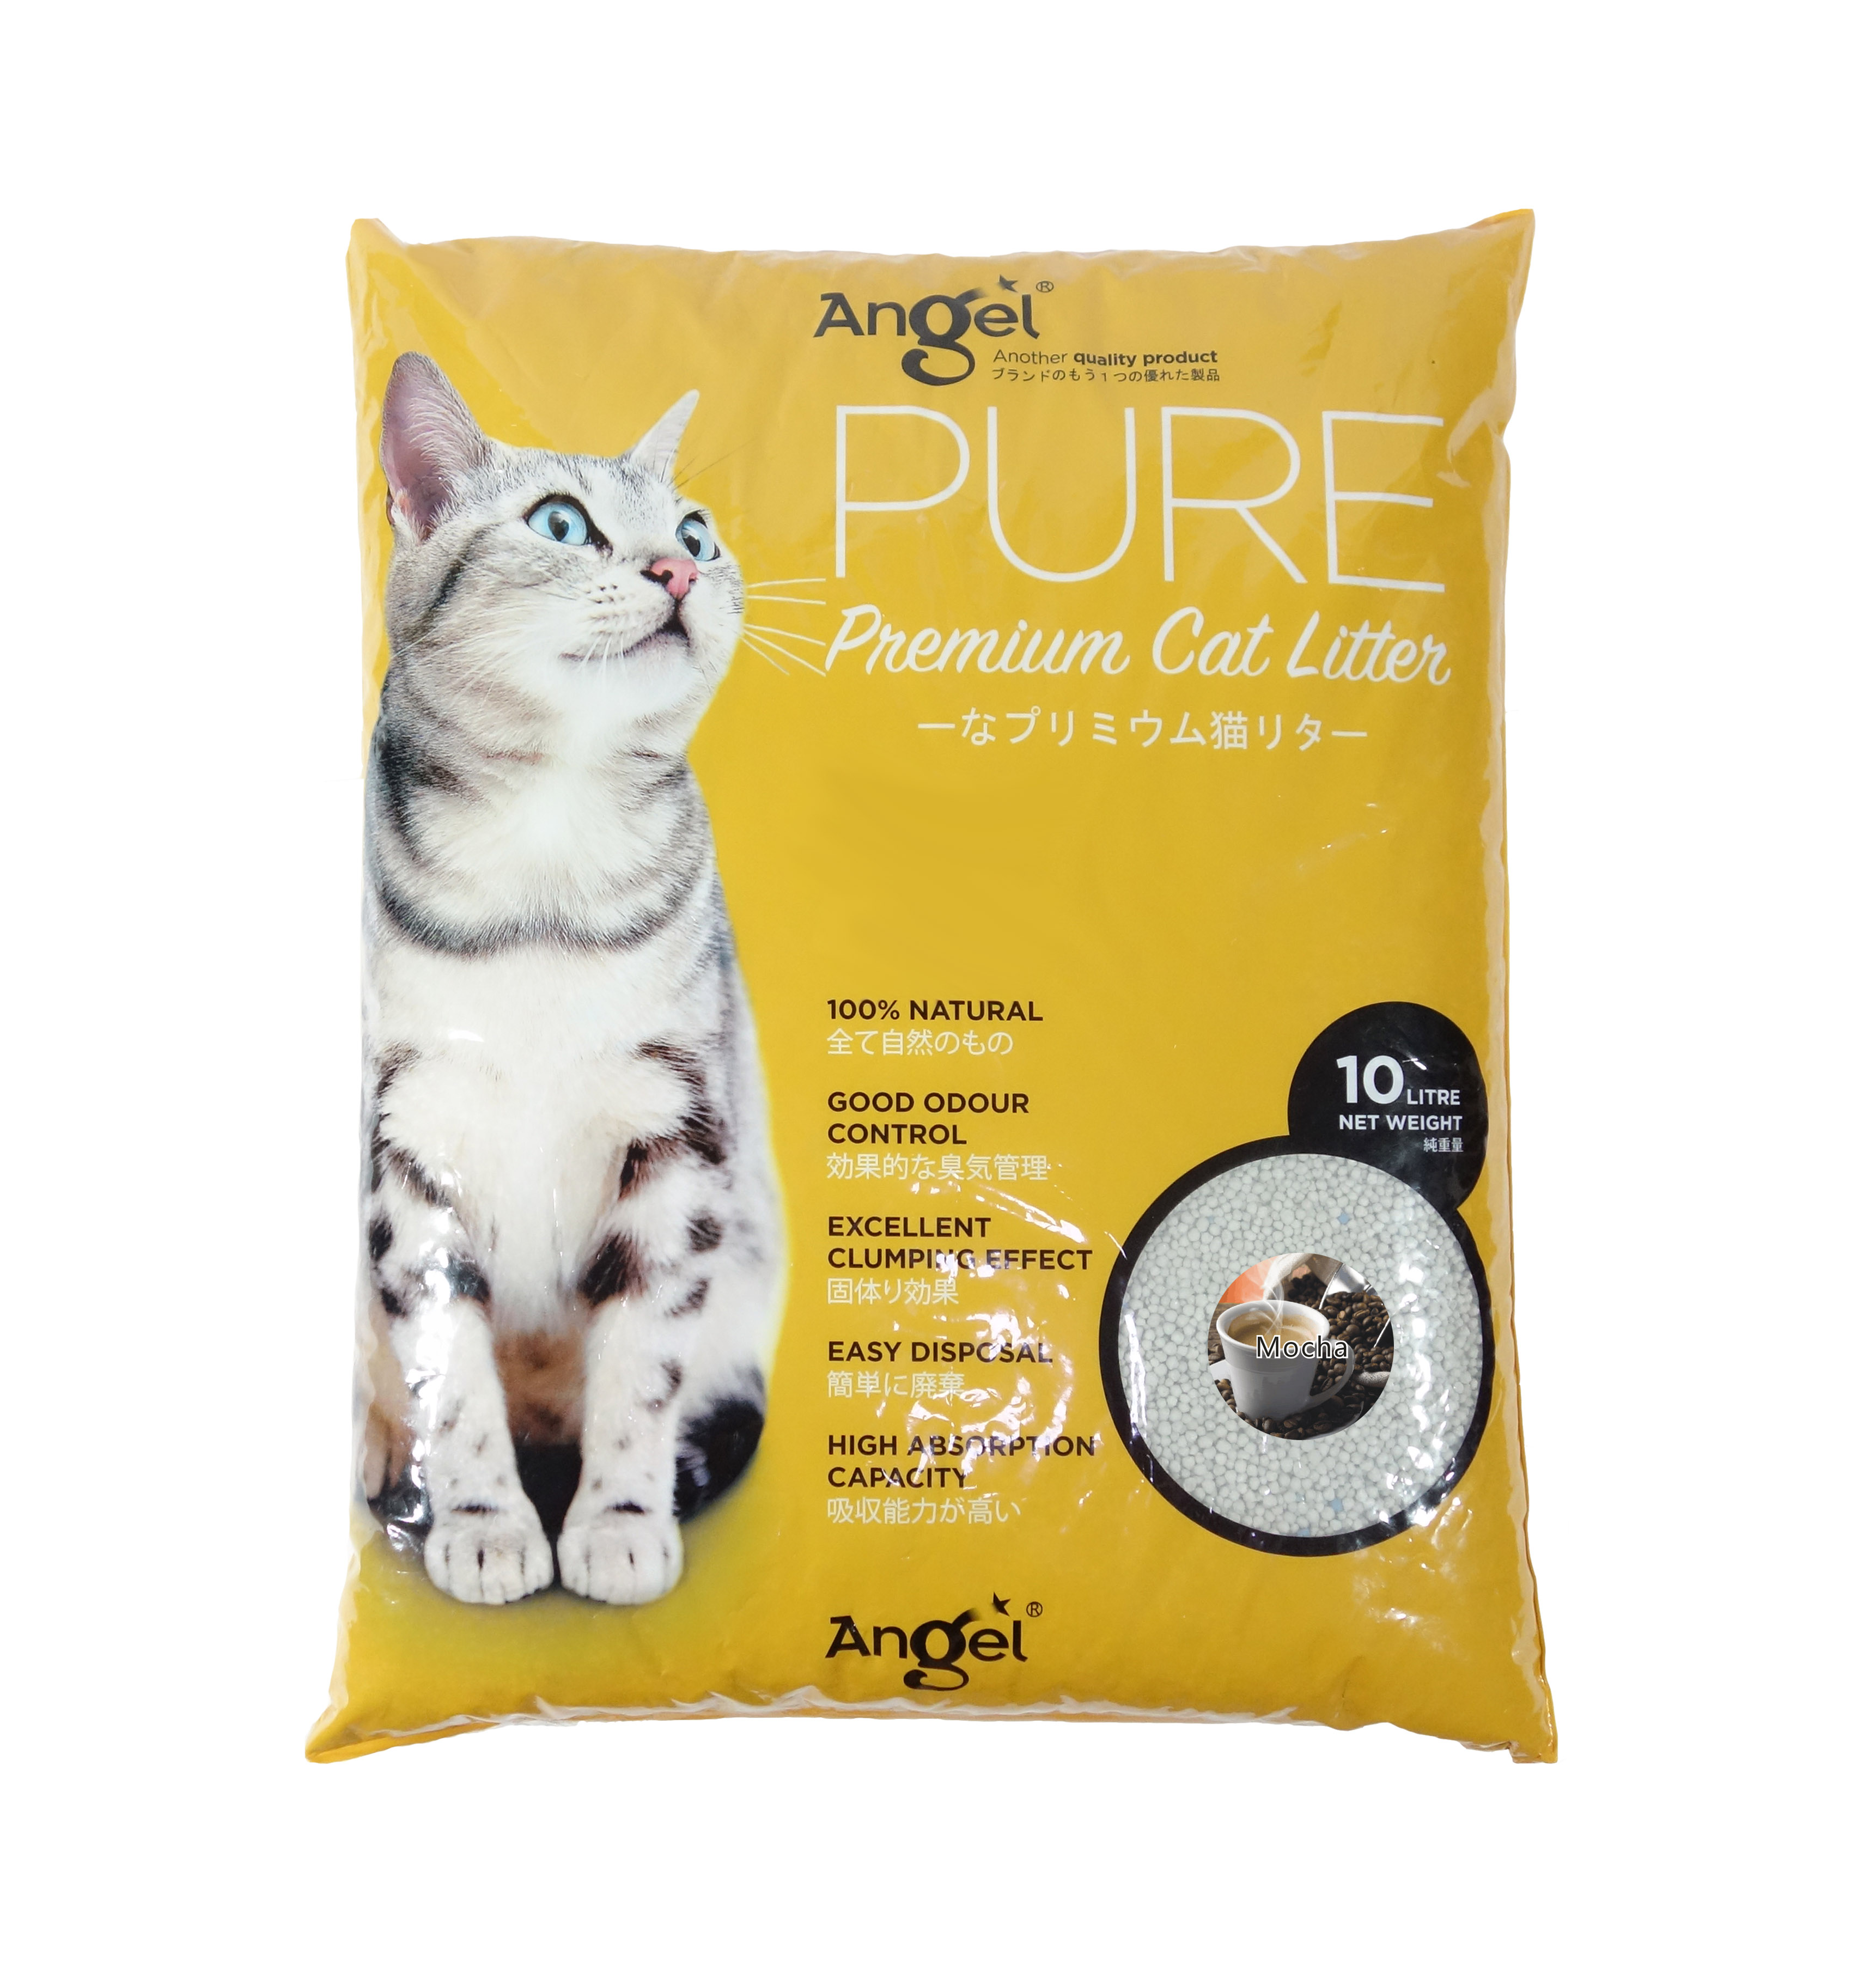 Angel Pure Premium Cat Litter 10L Mocha Scented